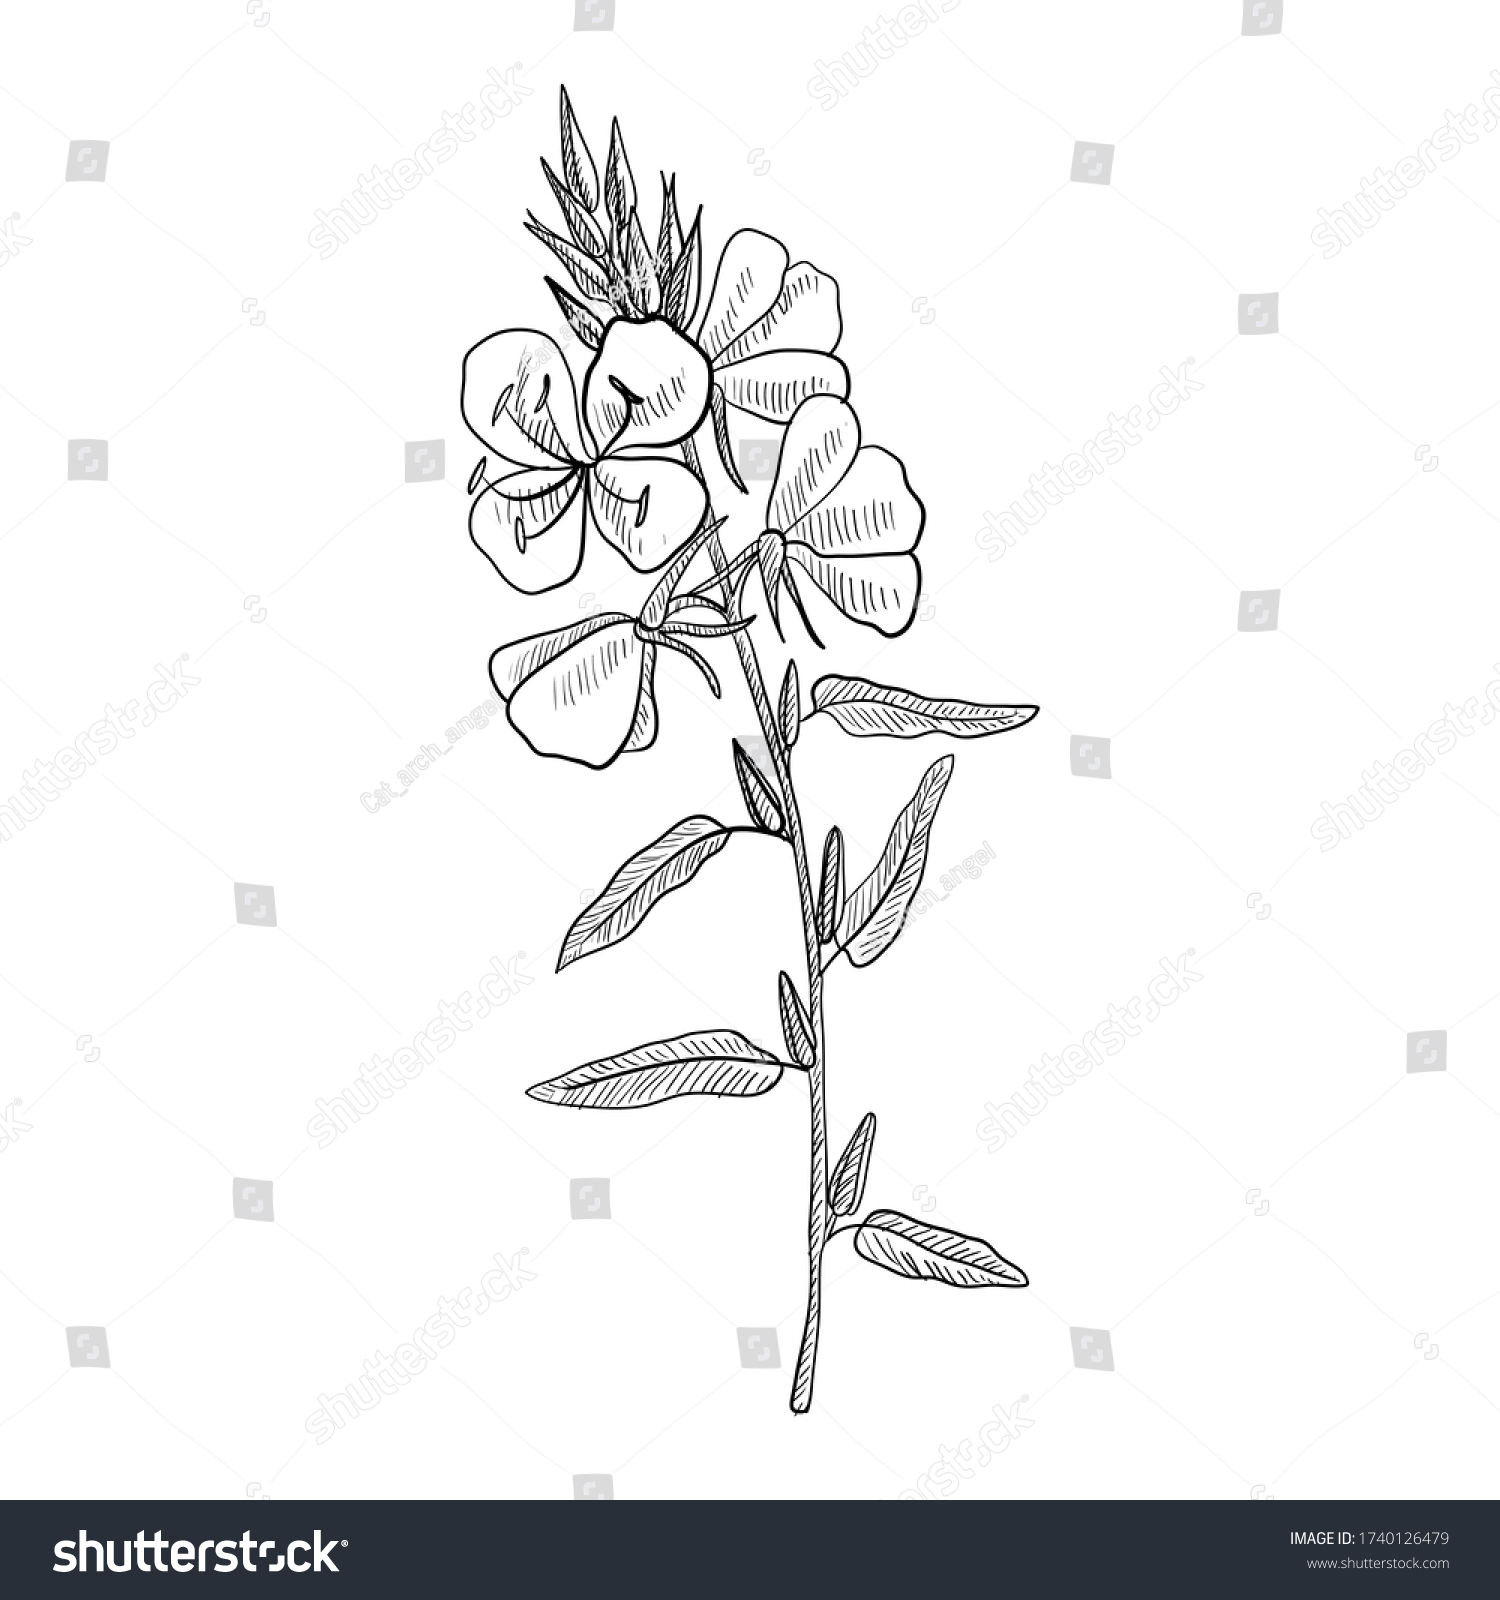 vector drawing evening primrose flower ,Oenothera , hand drawn illustration